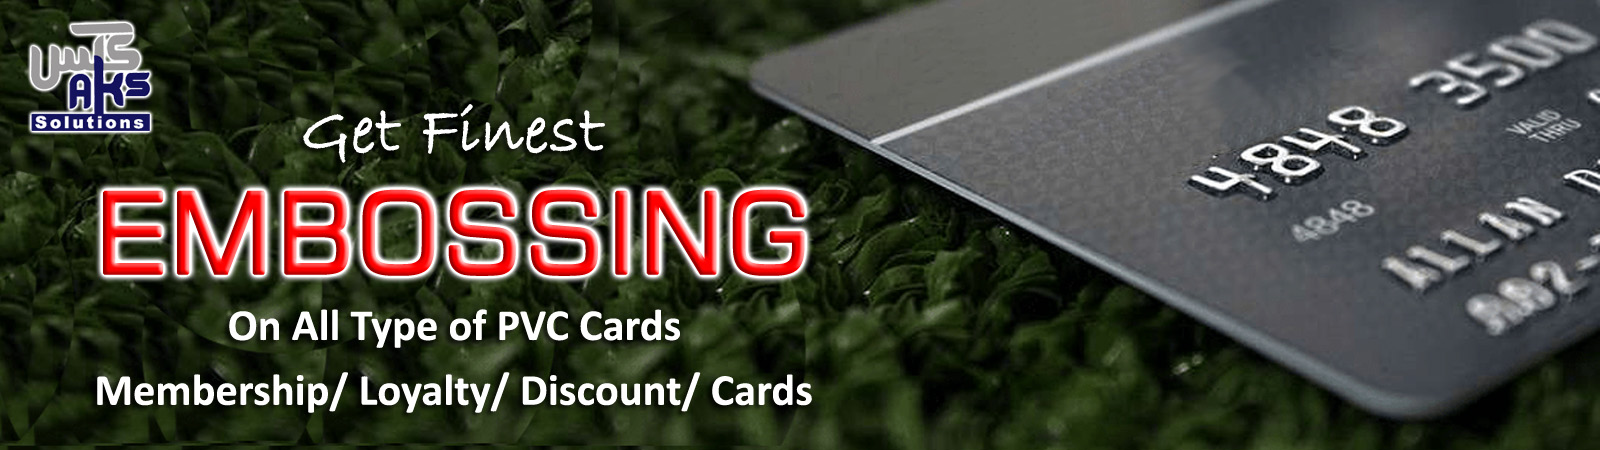 PVC Card Embossing slide-4.jpg